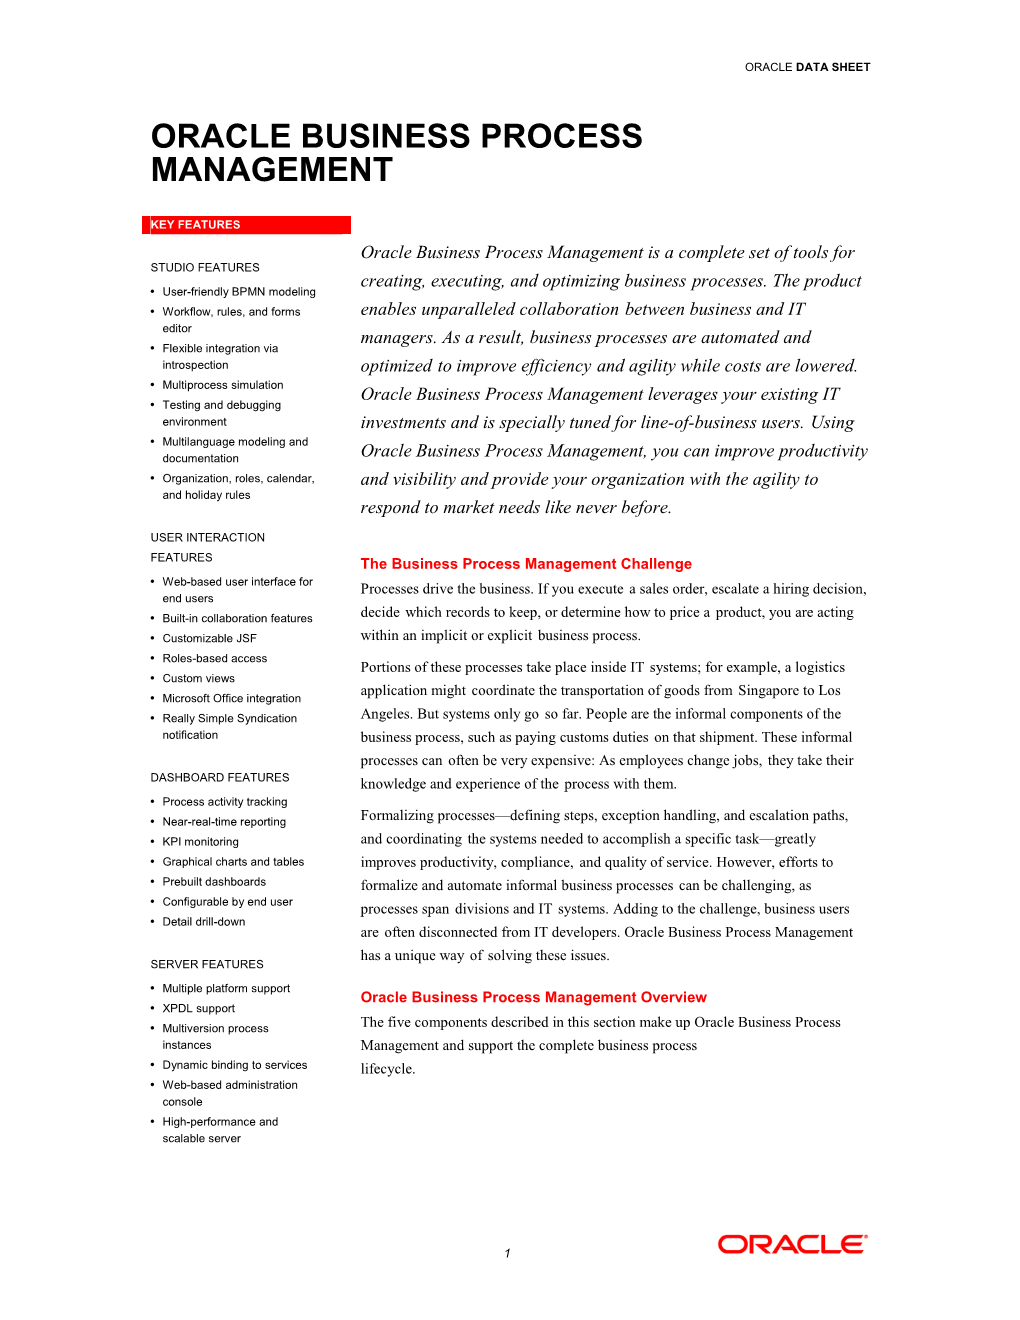 Oracle Business Process Management (PDF)